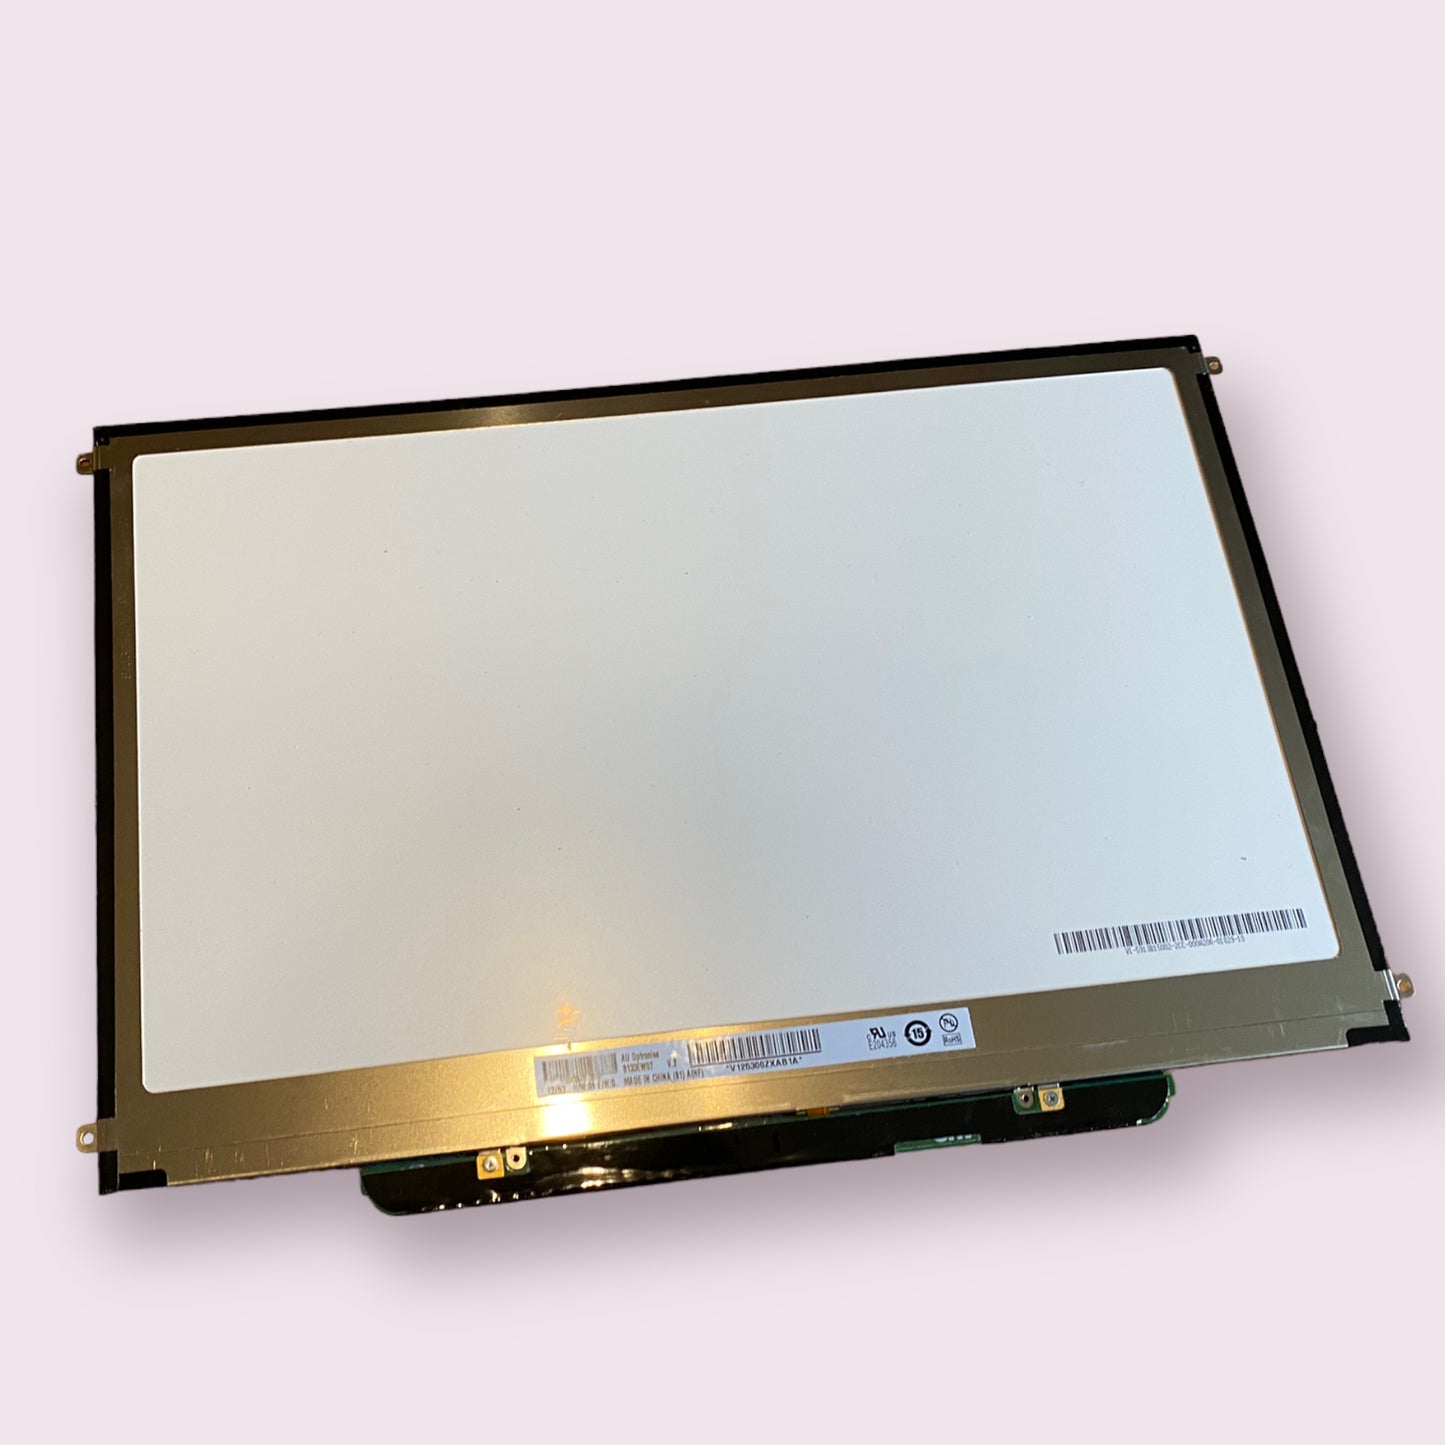 MacBook Pro A1278 13" LCD Display Screen Panel B133EW07 H/W:0A F/W:0 - Genuine Pull Part